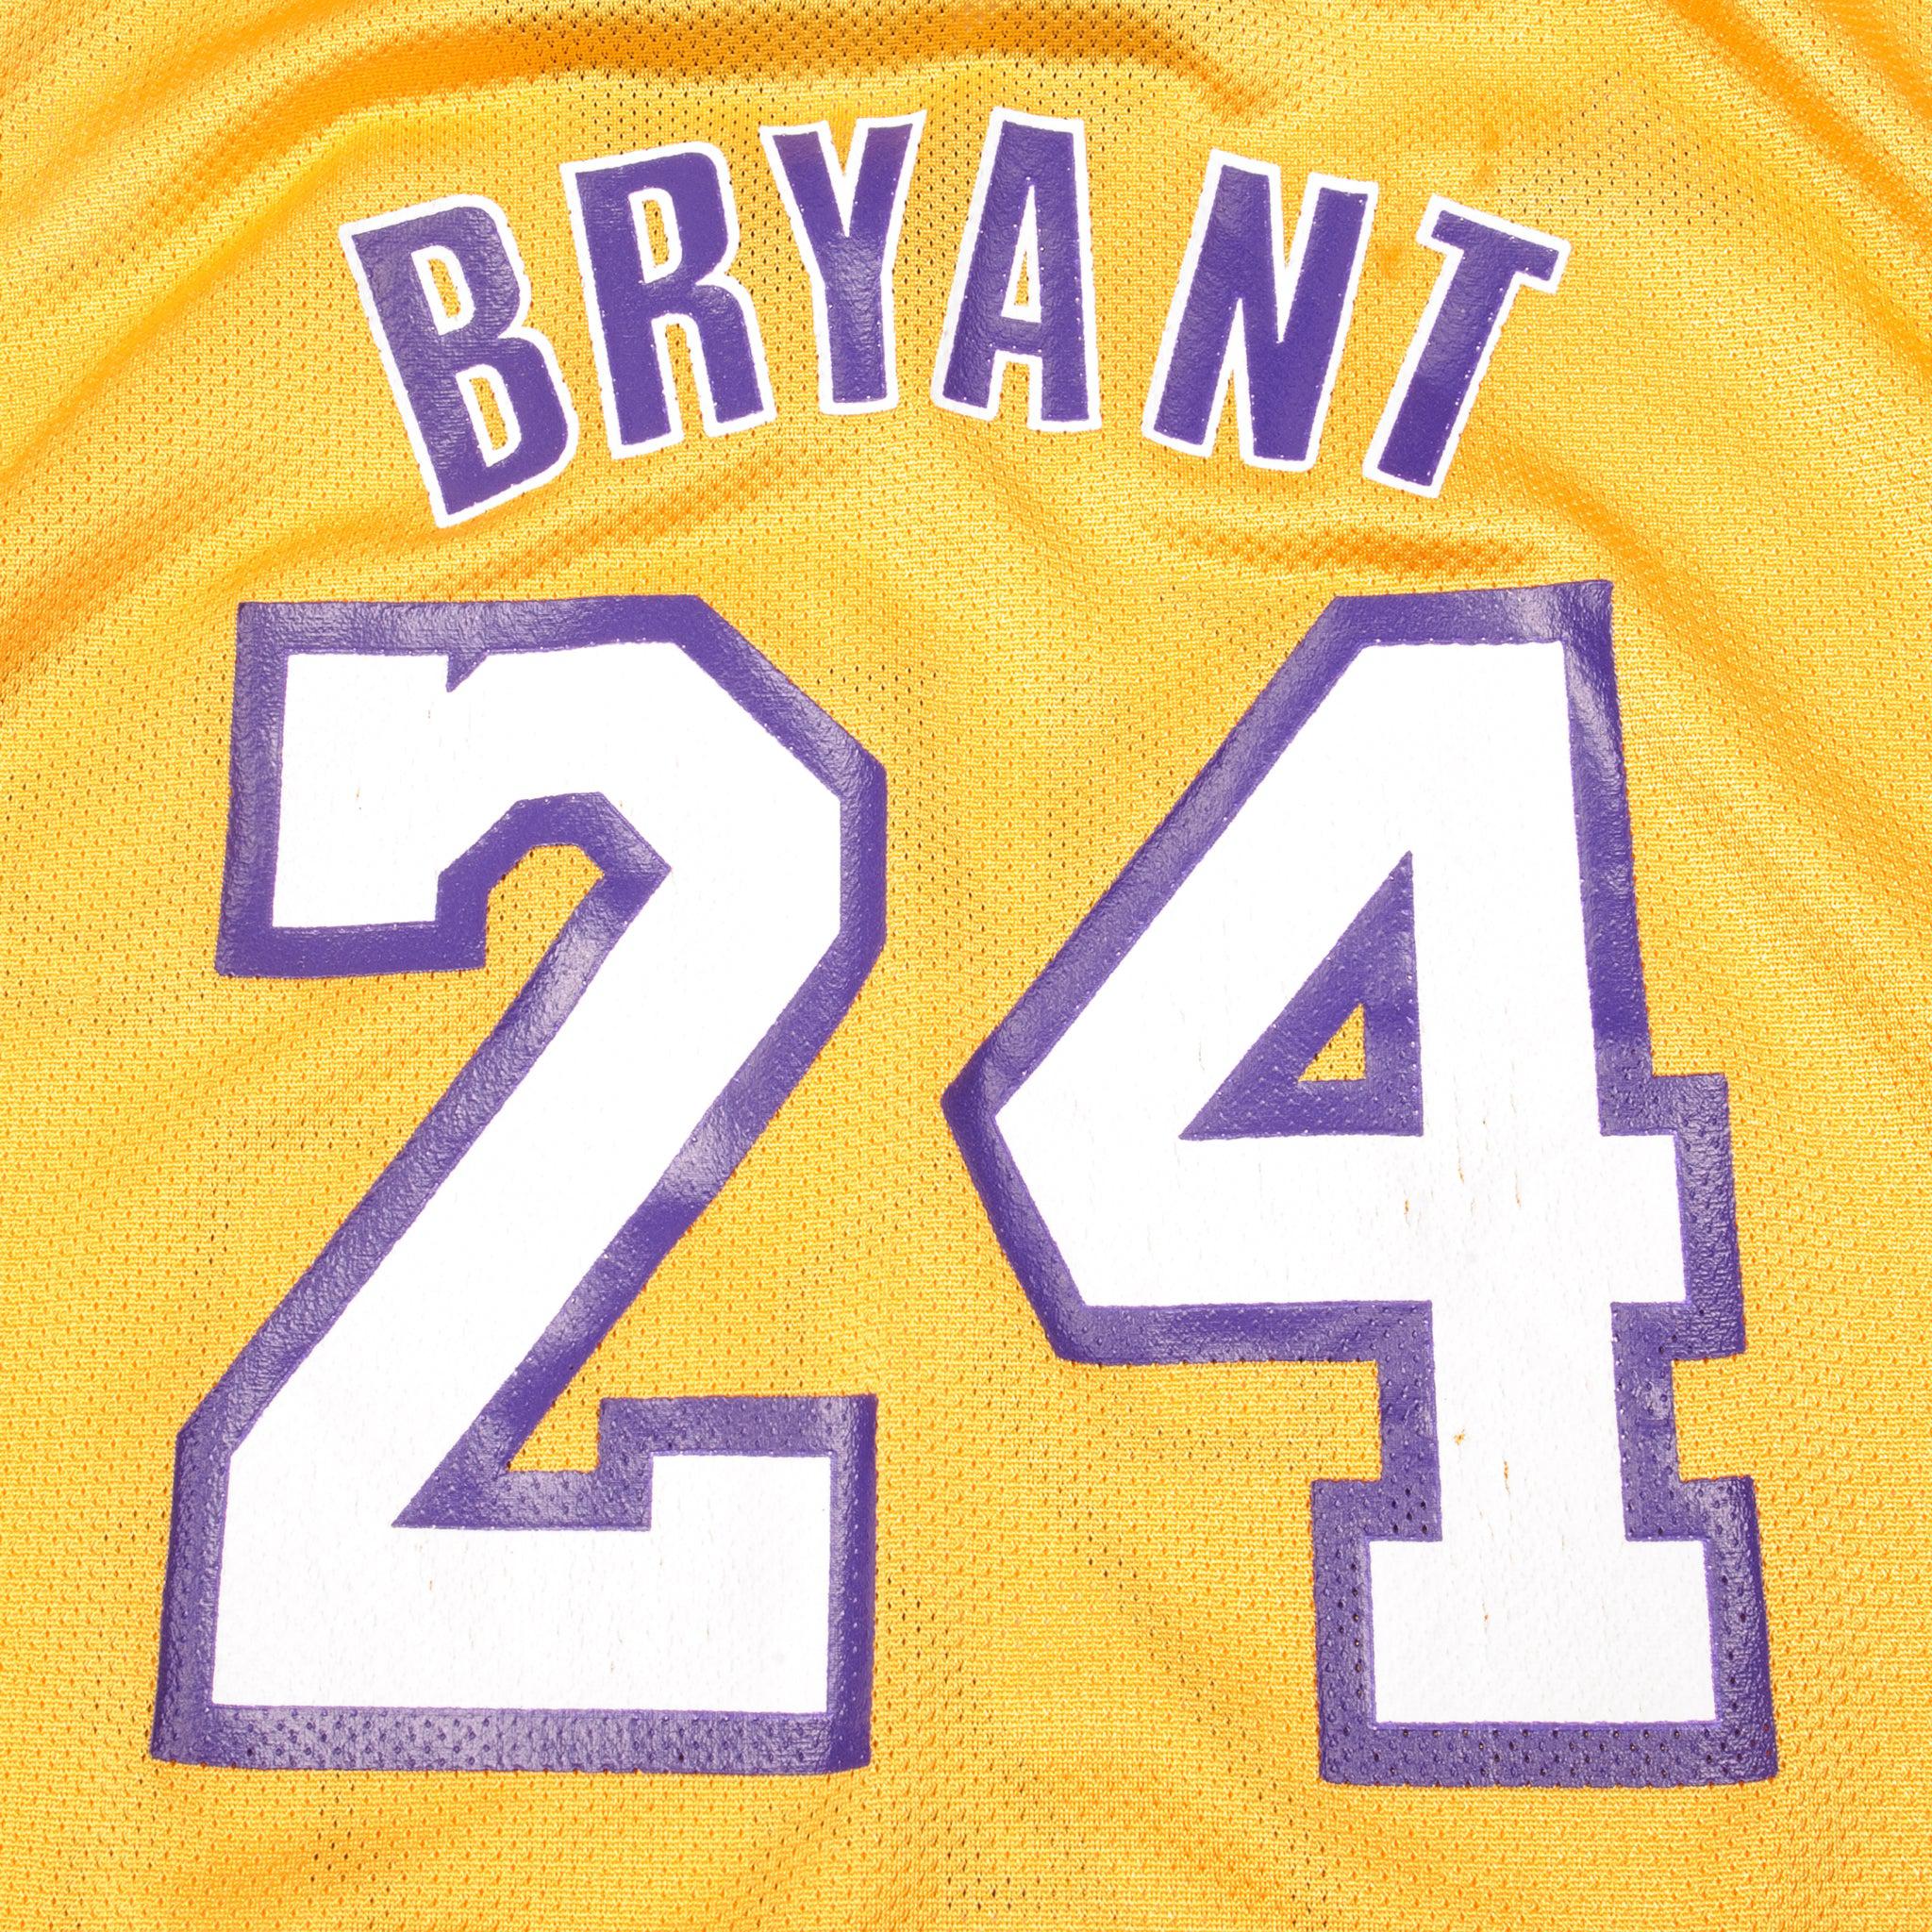 Adidas LA Lakers Kobe Bryant # 24 T-Shirt Fits Small – Retrace